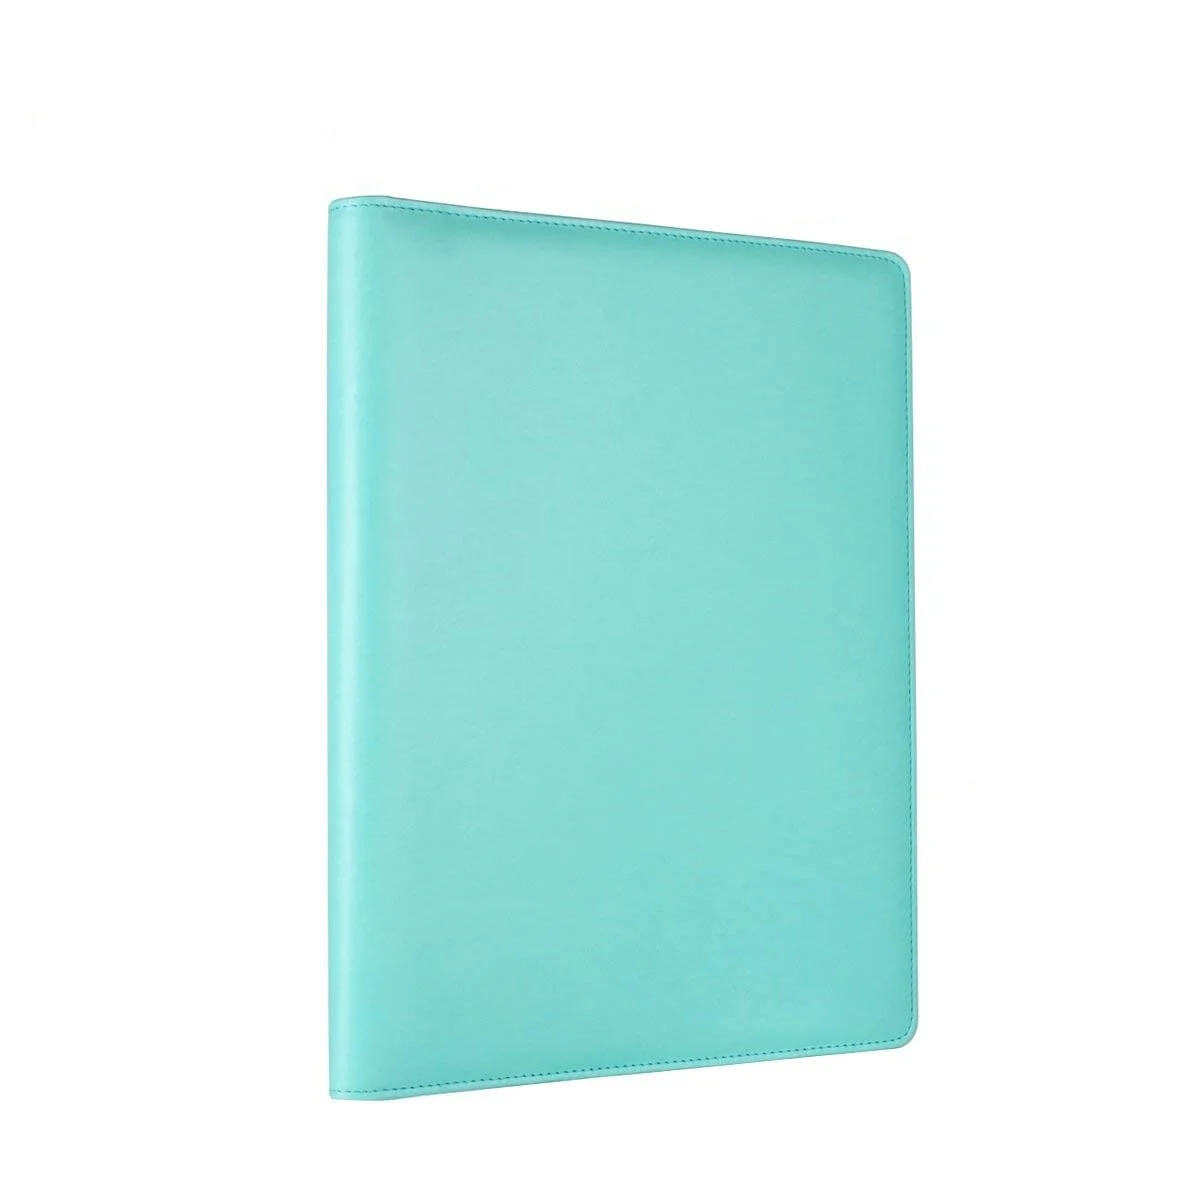 Blue PU Leather Resume Storage Clipboard Folder Portfolio Padfolio for Business